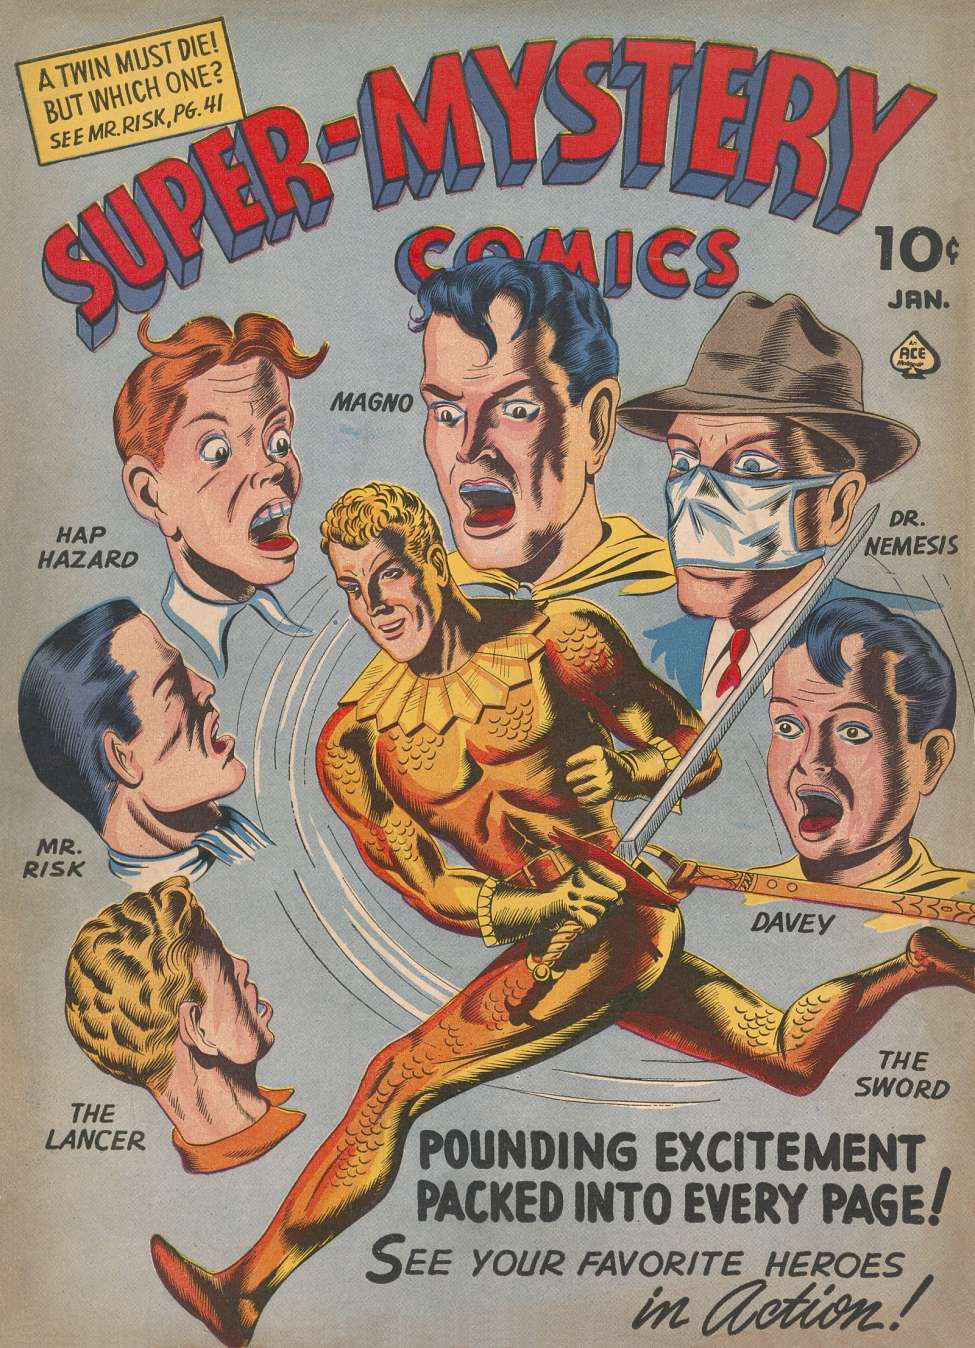 Comic Book Cover For Super-Mystery Comics v4 1 - Version 2